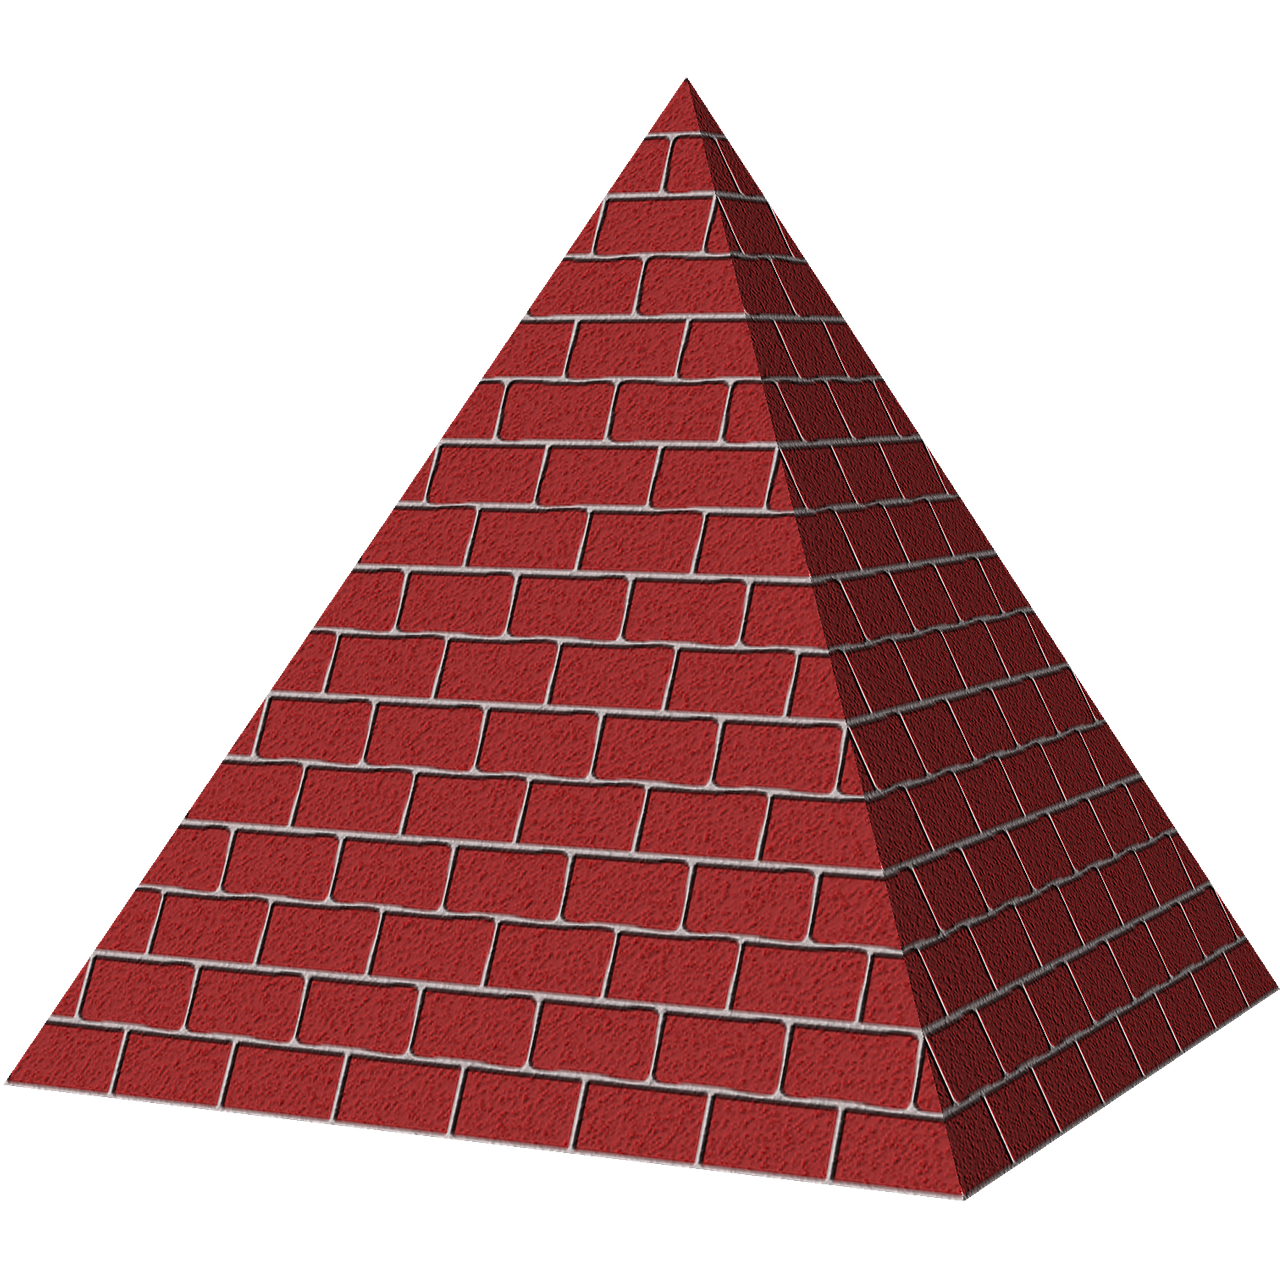 edit-free-photo-of-pyramid-shape-3d-triangle-geometric-needpix